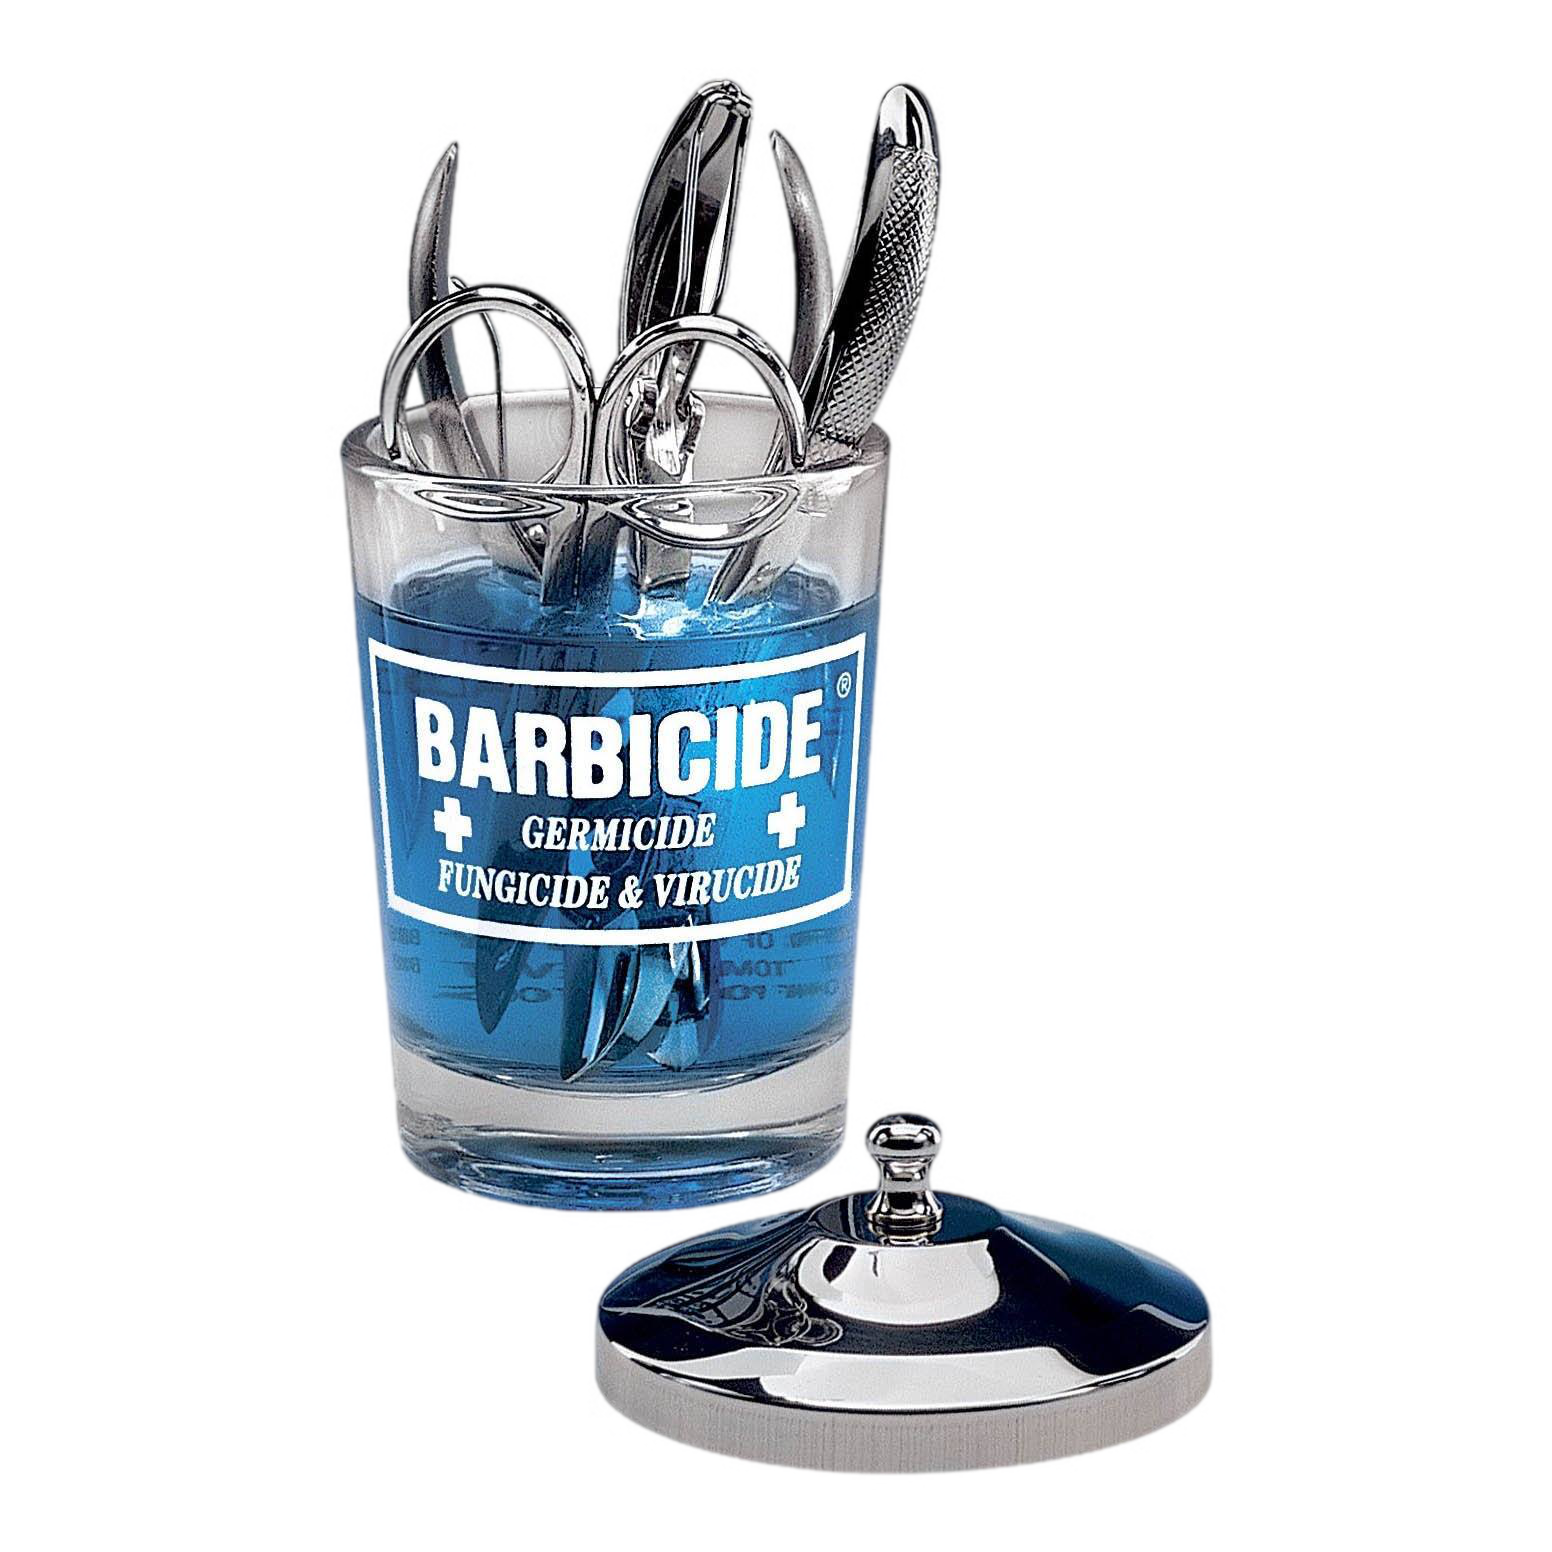 Barbicide glasskrukke - 120 ml